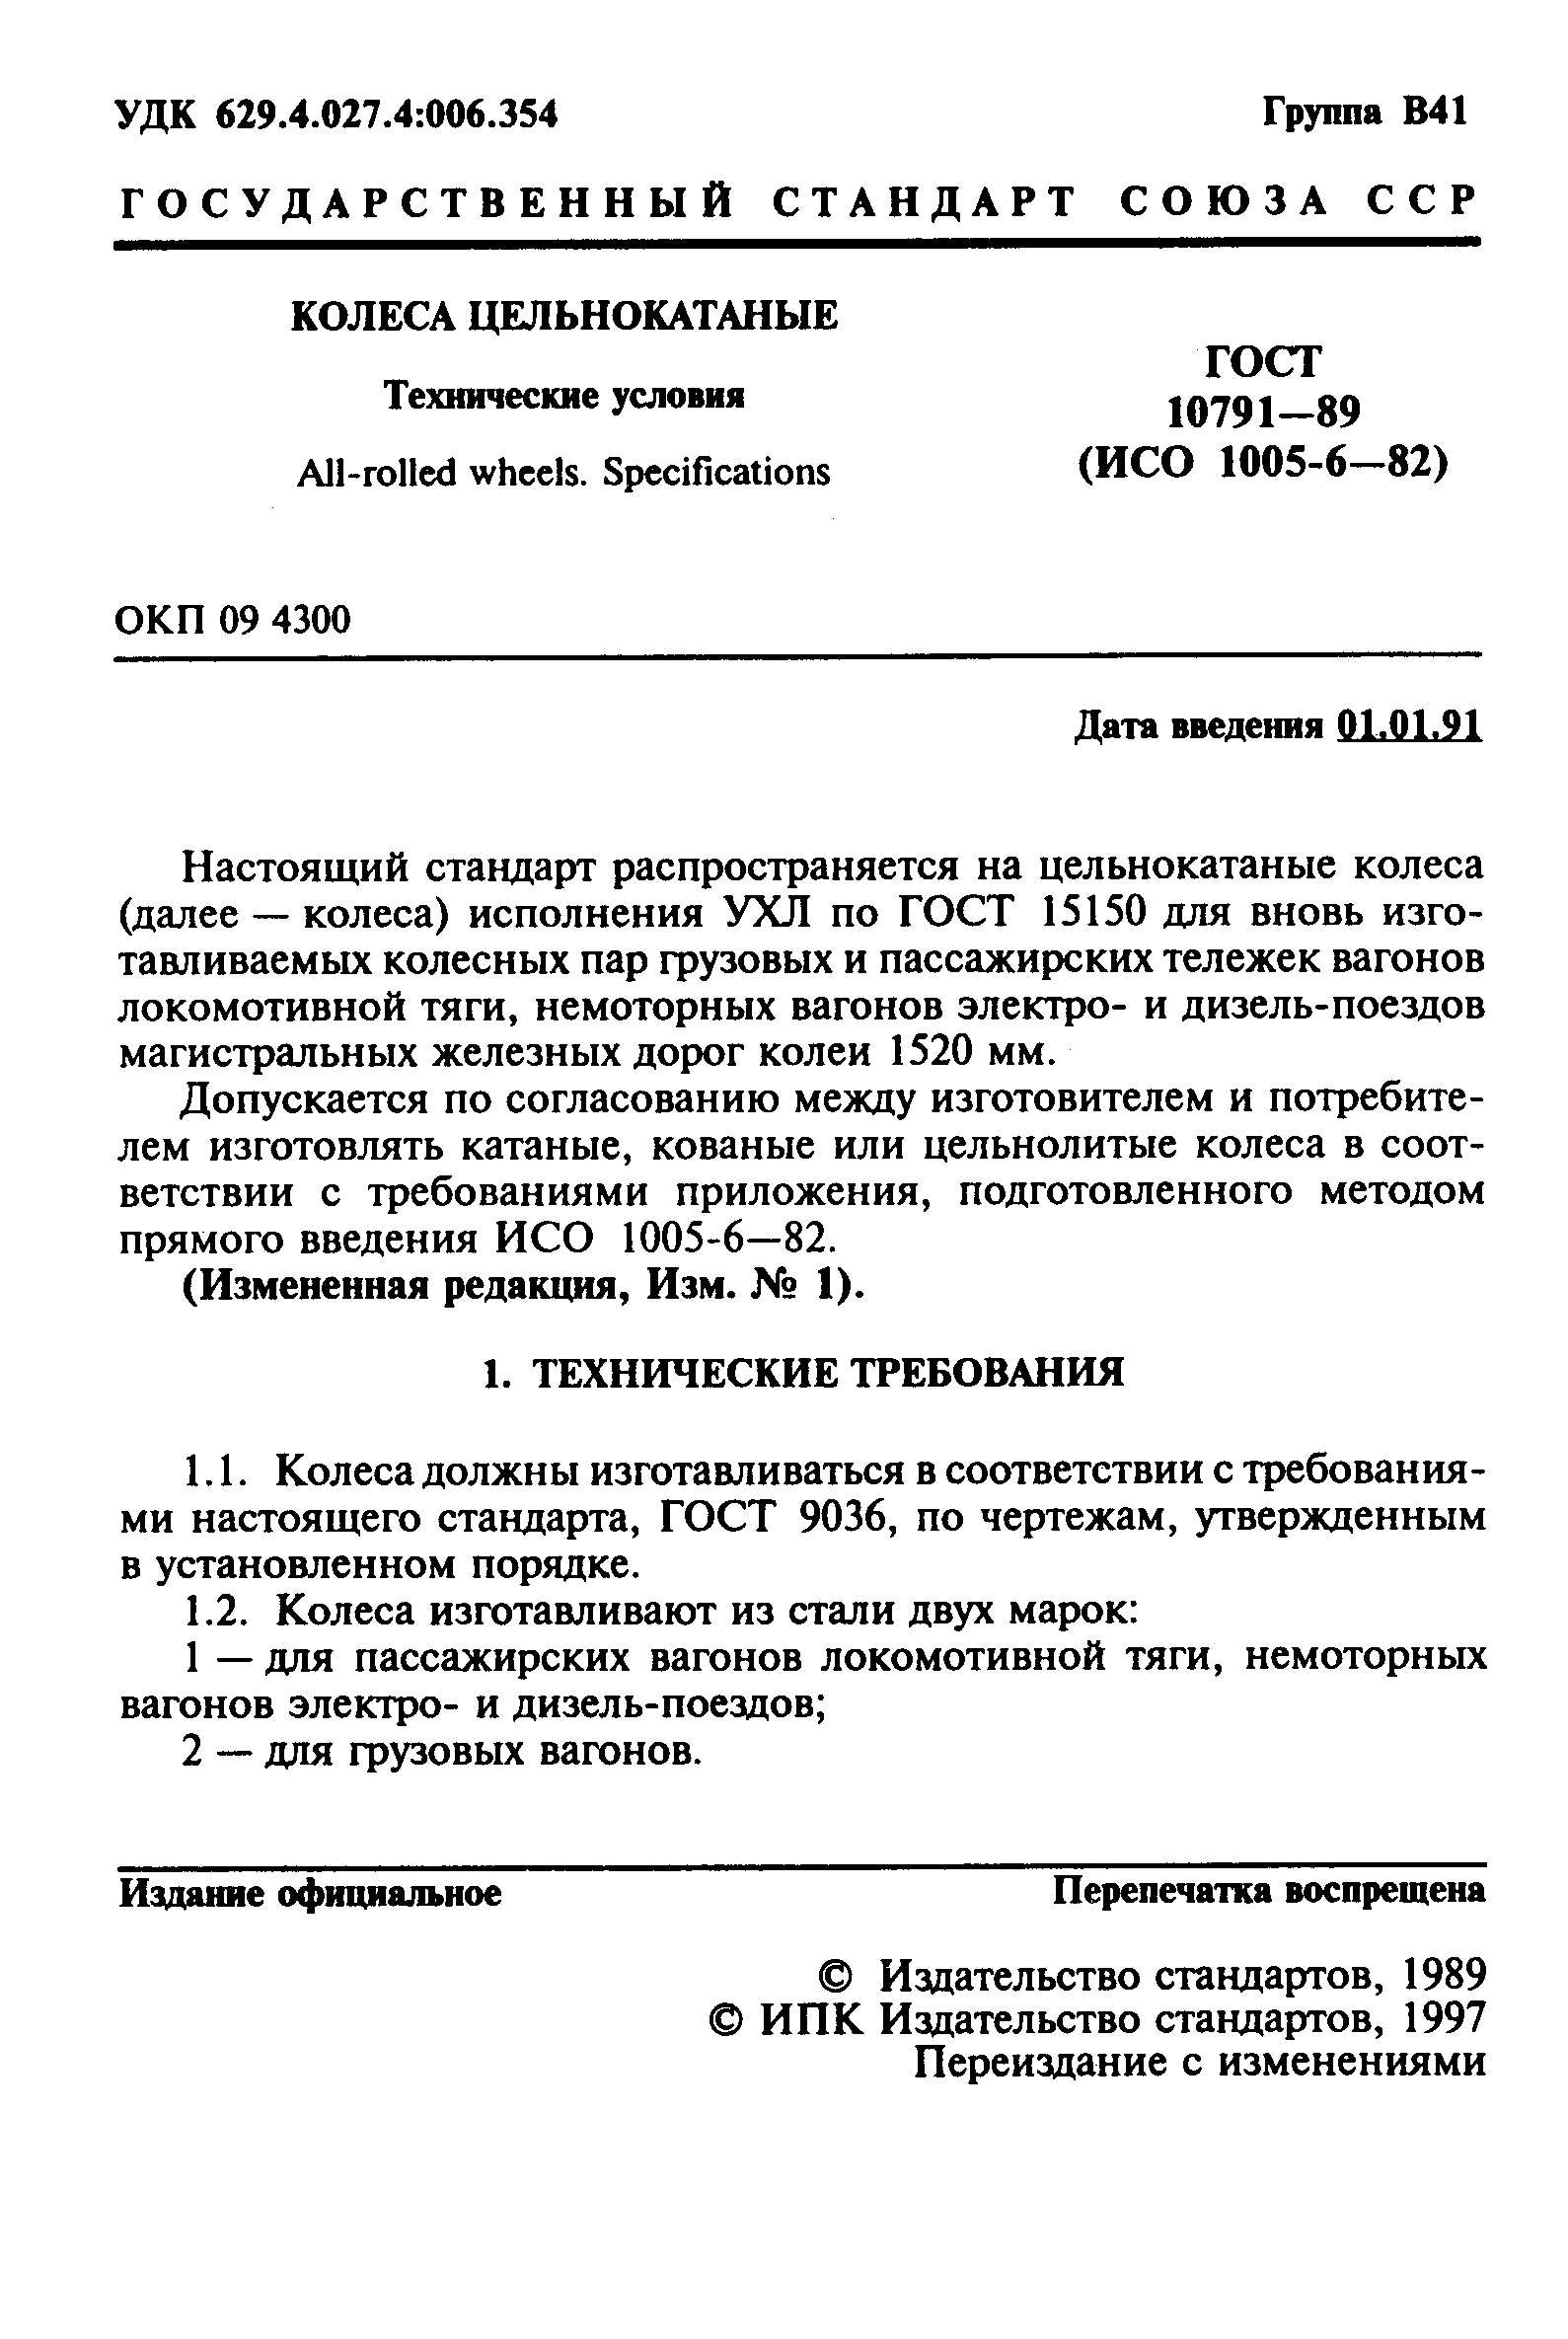 ГОСТ 10791-89